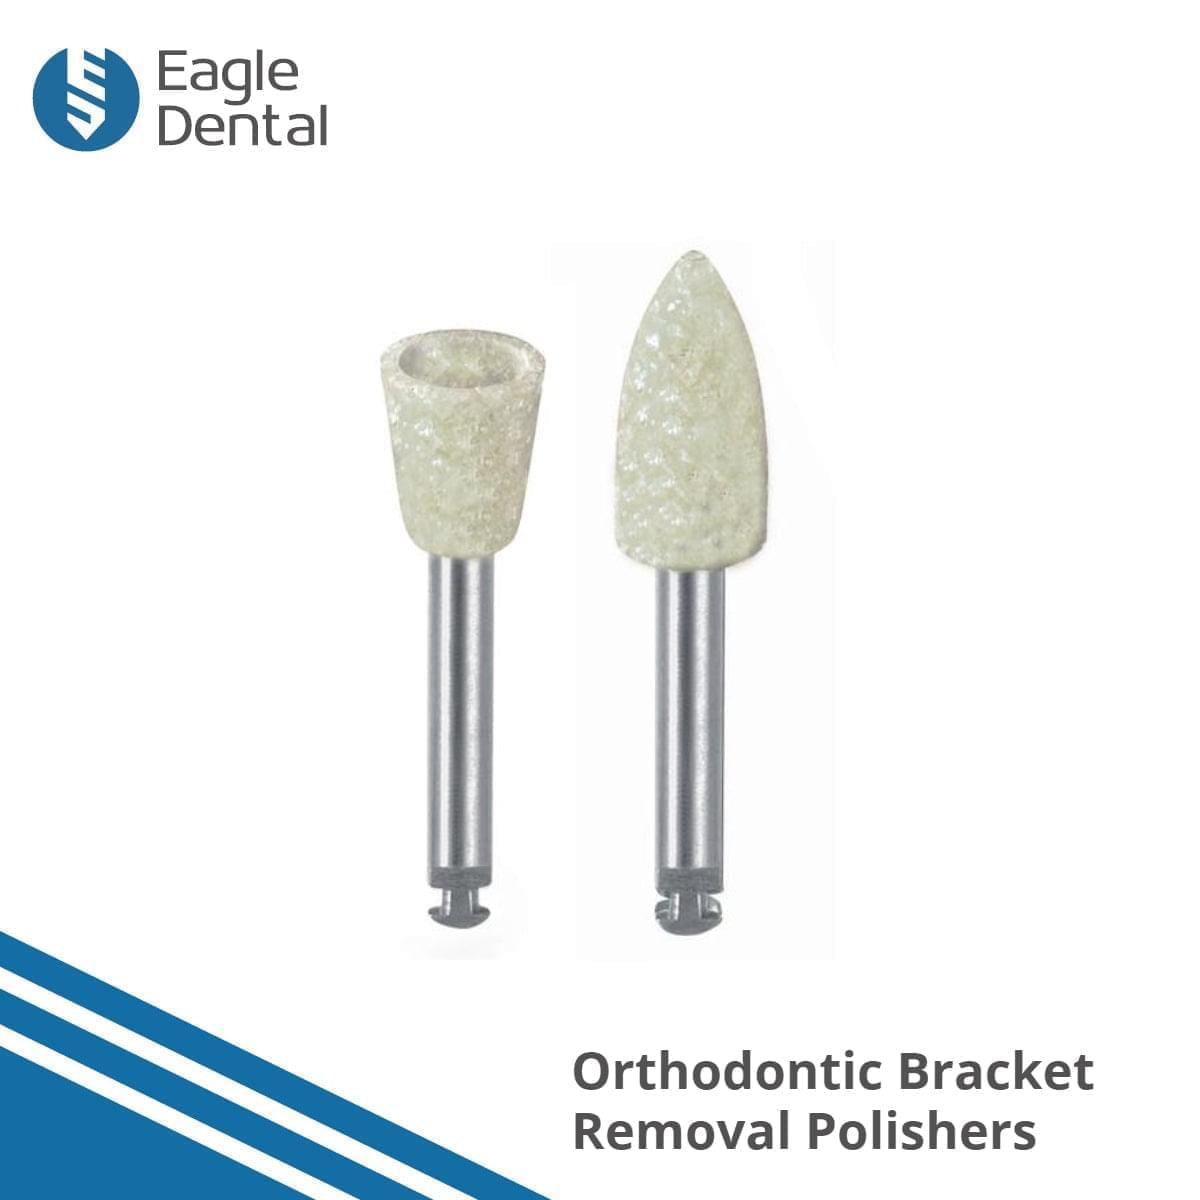 Orthodontic bracket removal polishers